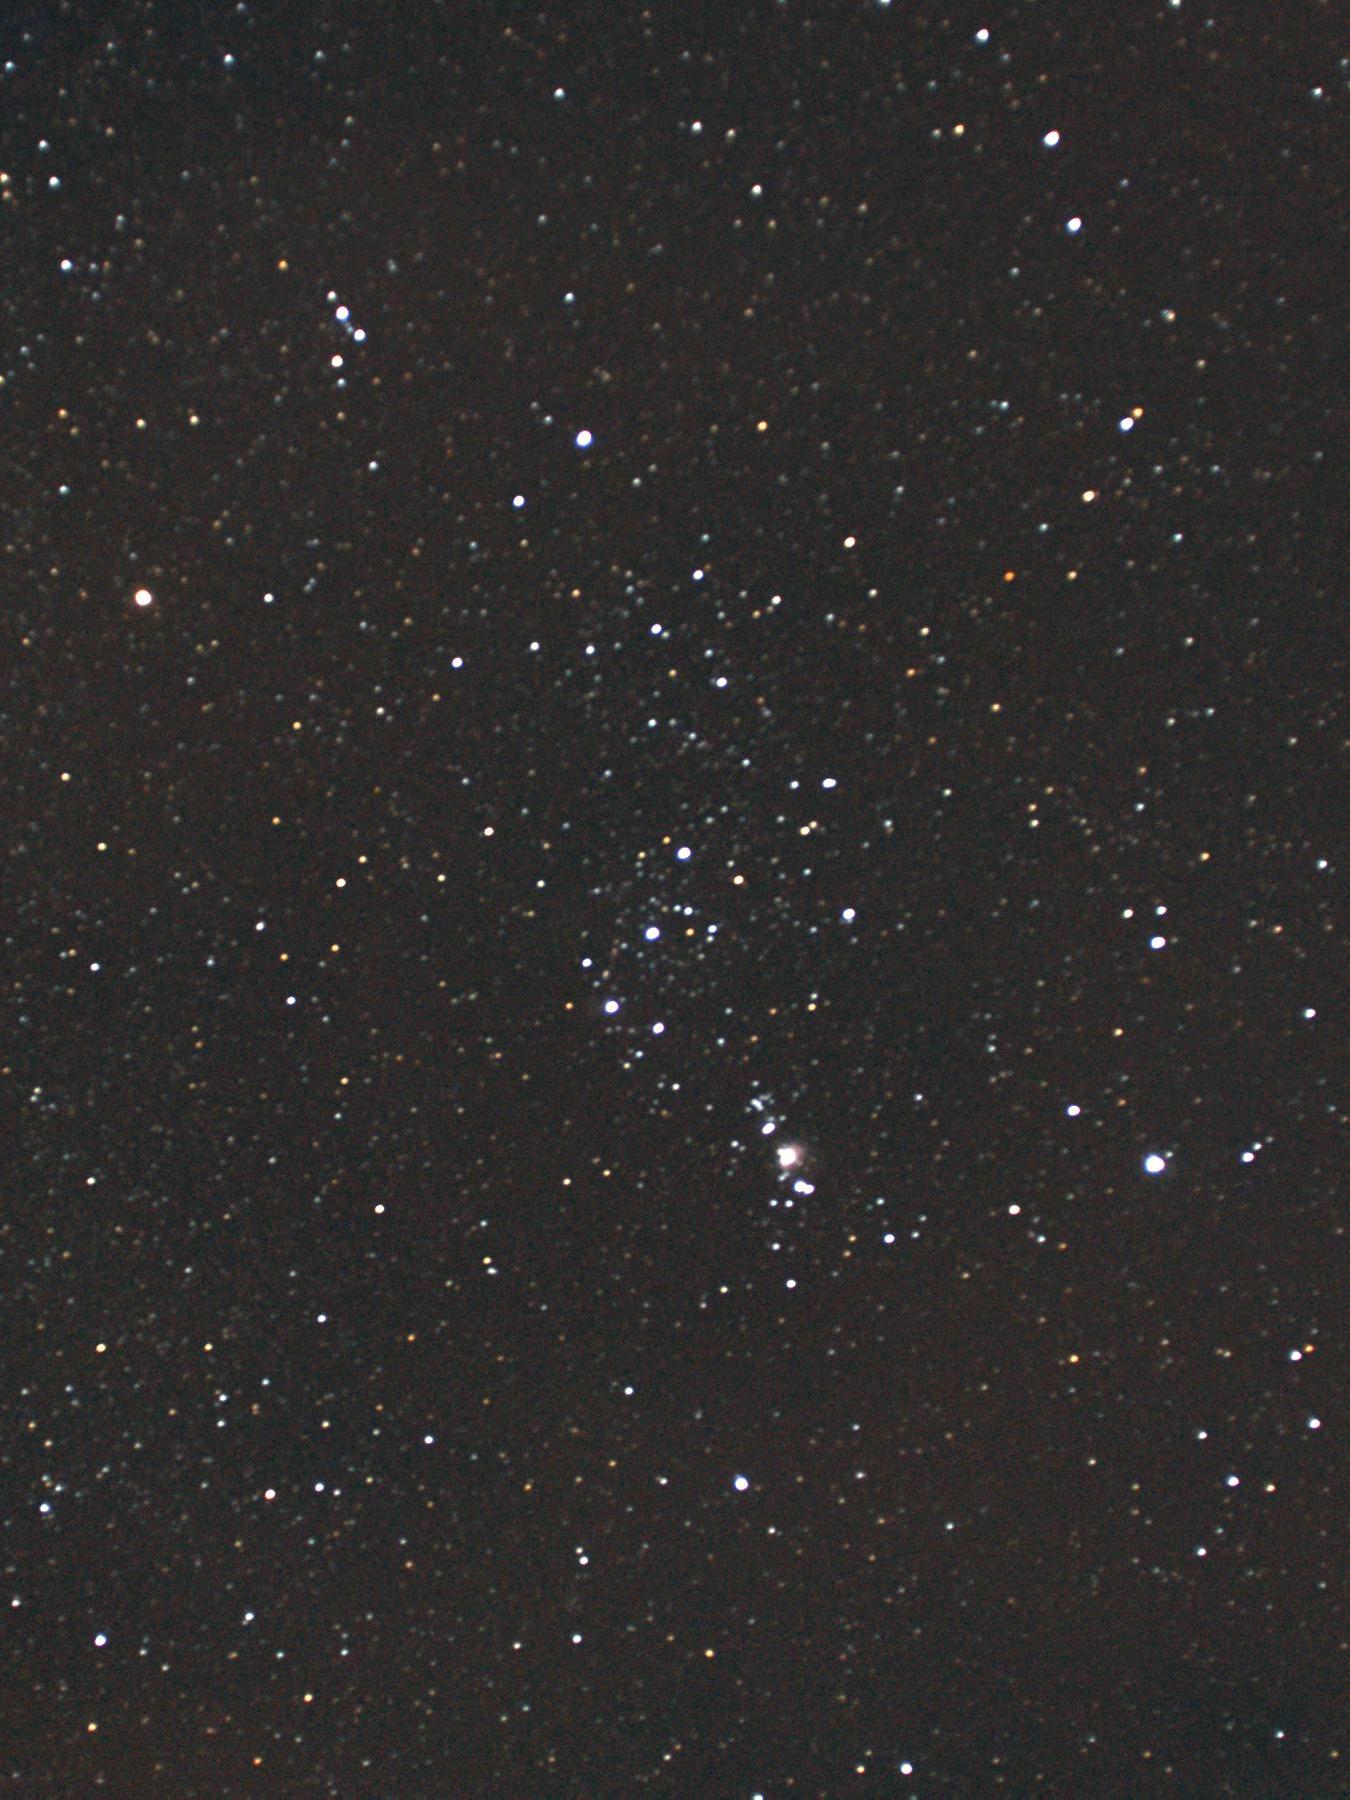 Nom : Orion 20130101 - Retraite.jpg
Affichages : 129
Taille : 255,2 Ko